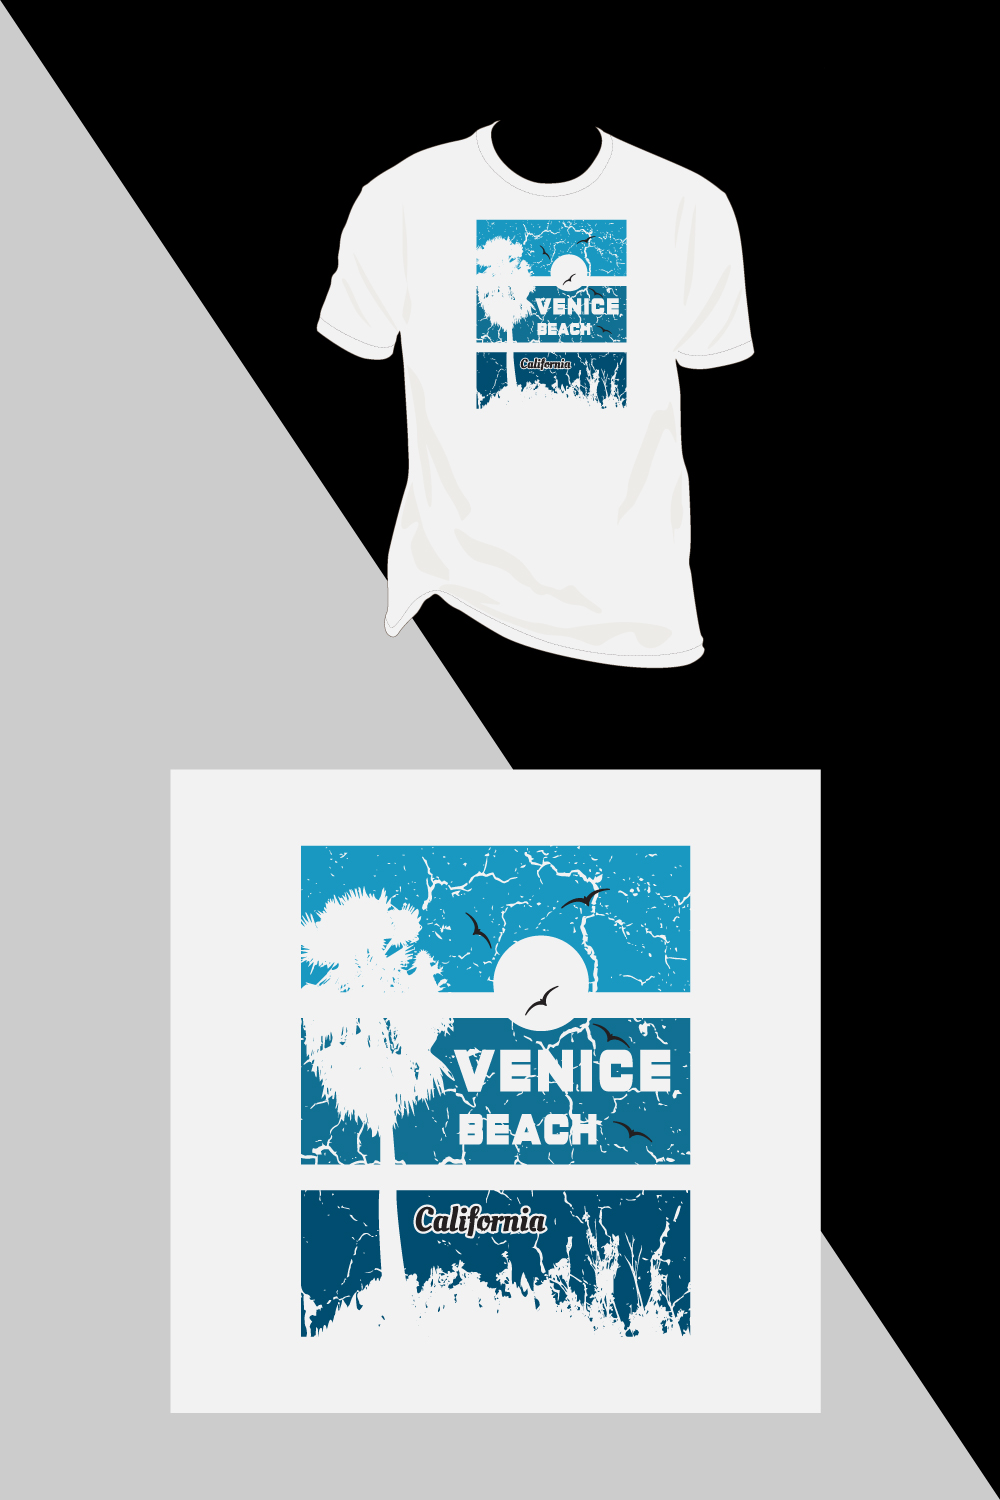 Venice beach, California Vintage Grunge Effect surfing boat, palm tree shirt design, print design, summer fashion pinterest preview image.